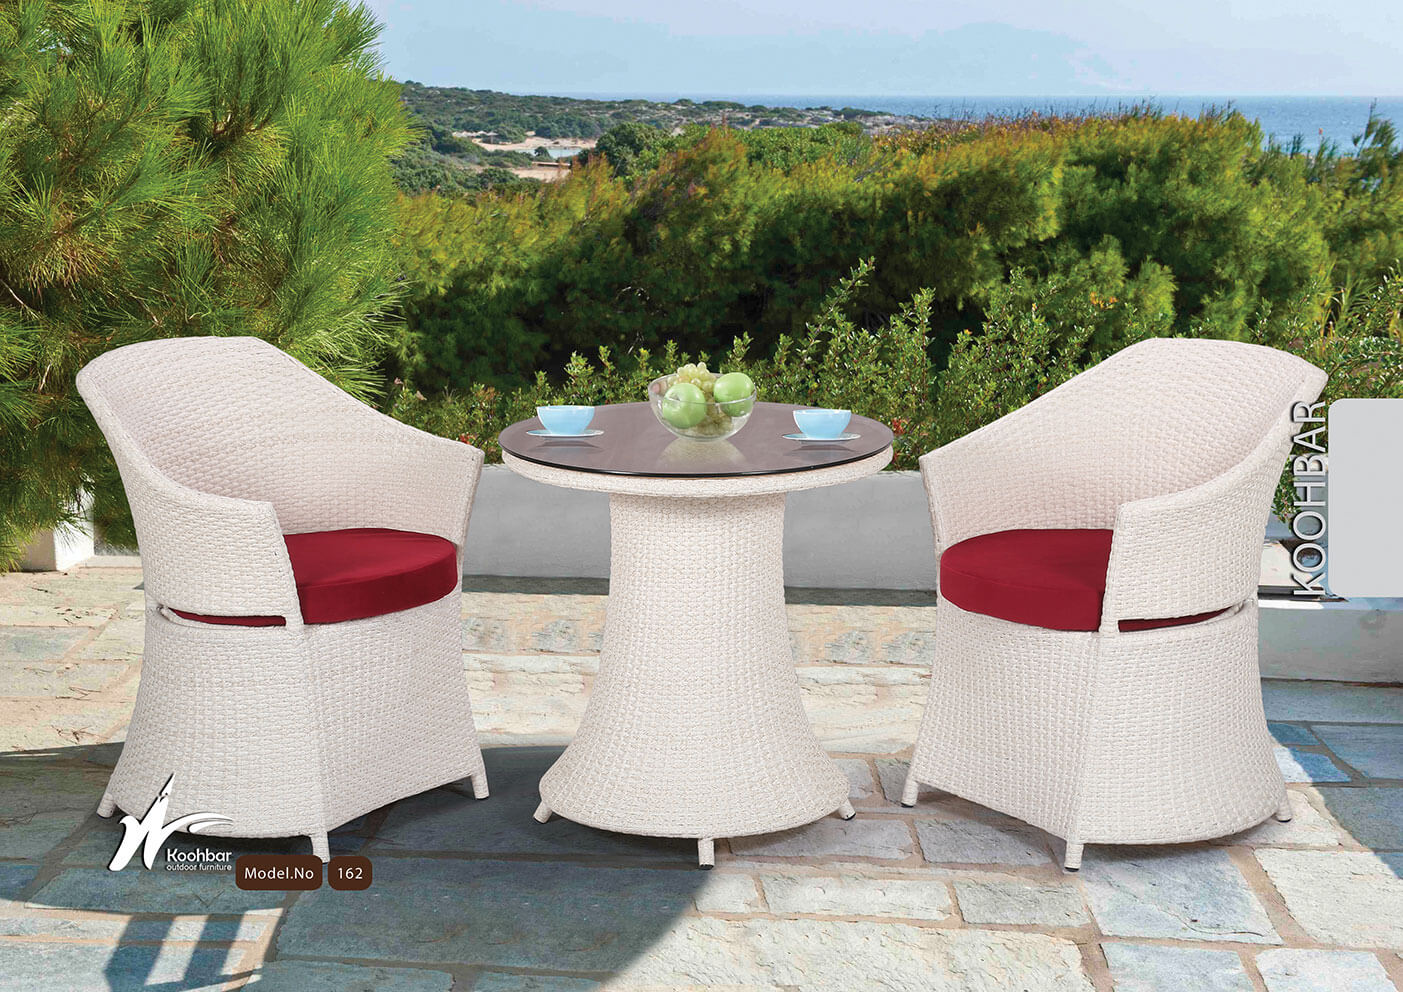 kohbar patio conversation sets 162 model0 - ست میز صندلی حصیری فضای باز کوهبر مدل ۱۶۲ -  - patio-conversation-sets